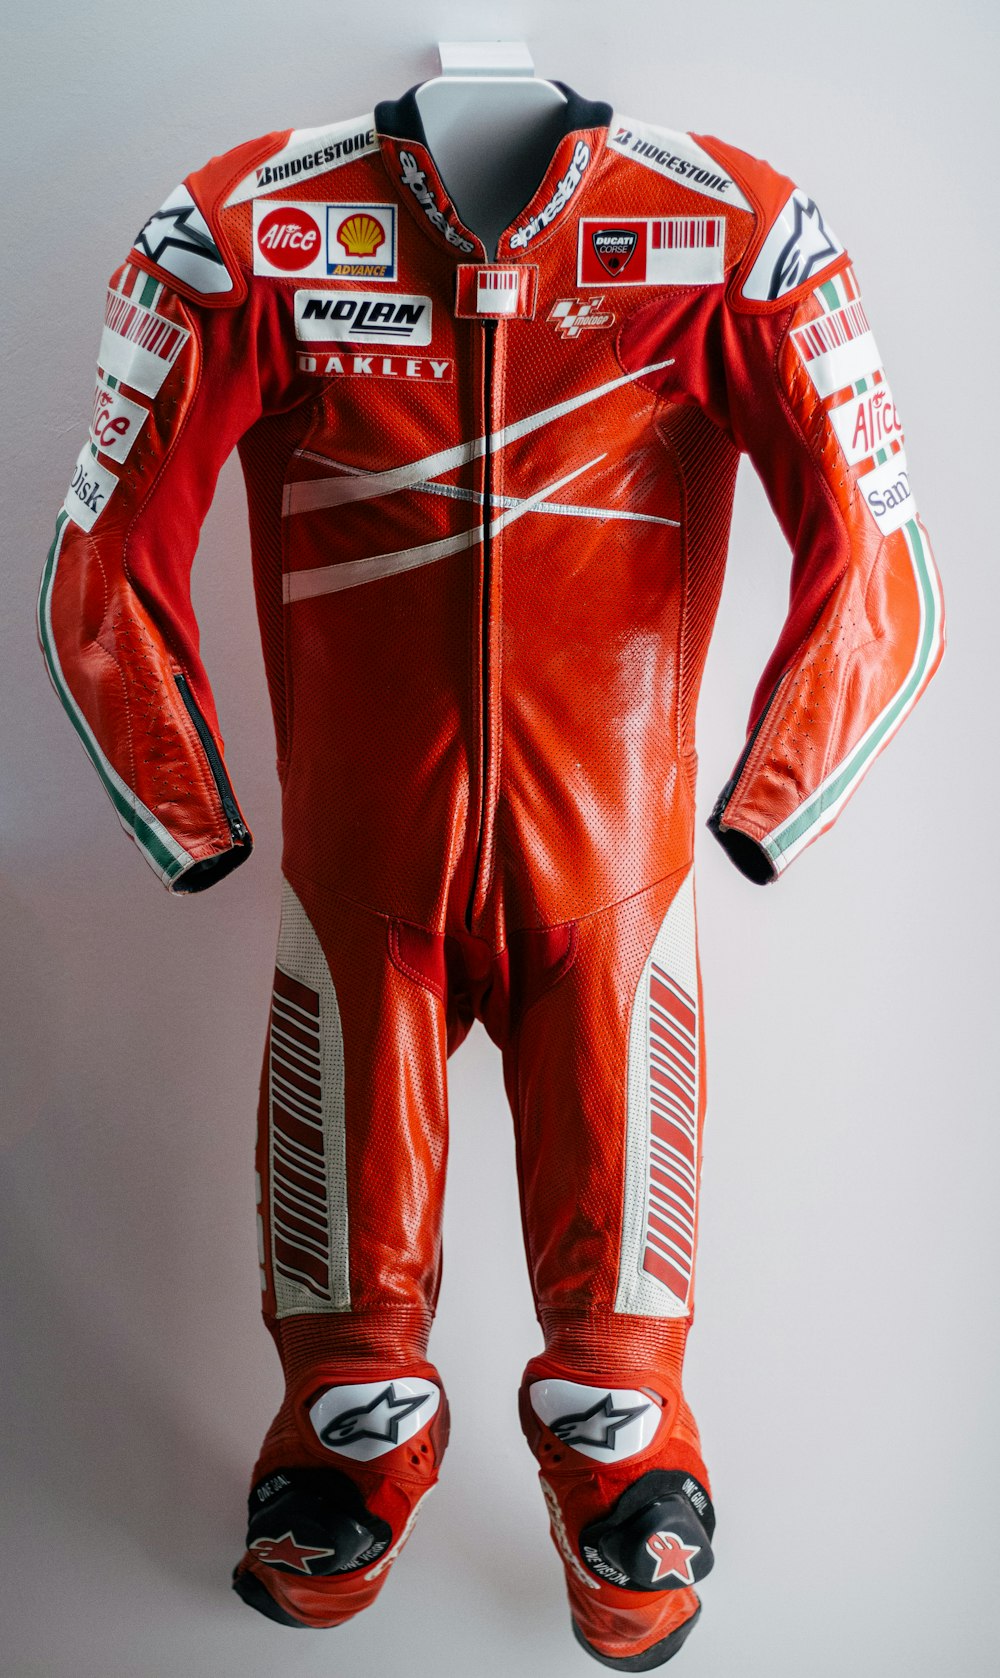 red and white adidas jersey shirt photo – Free Ducati museum Image on  Unsplash